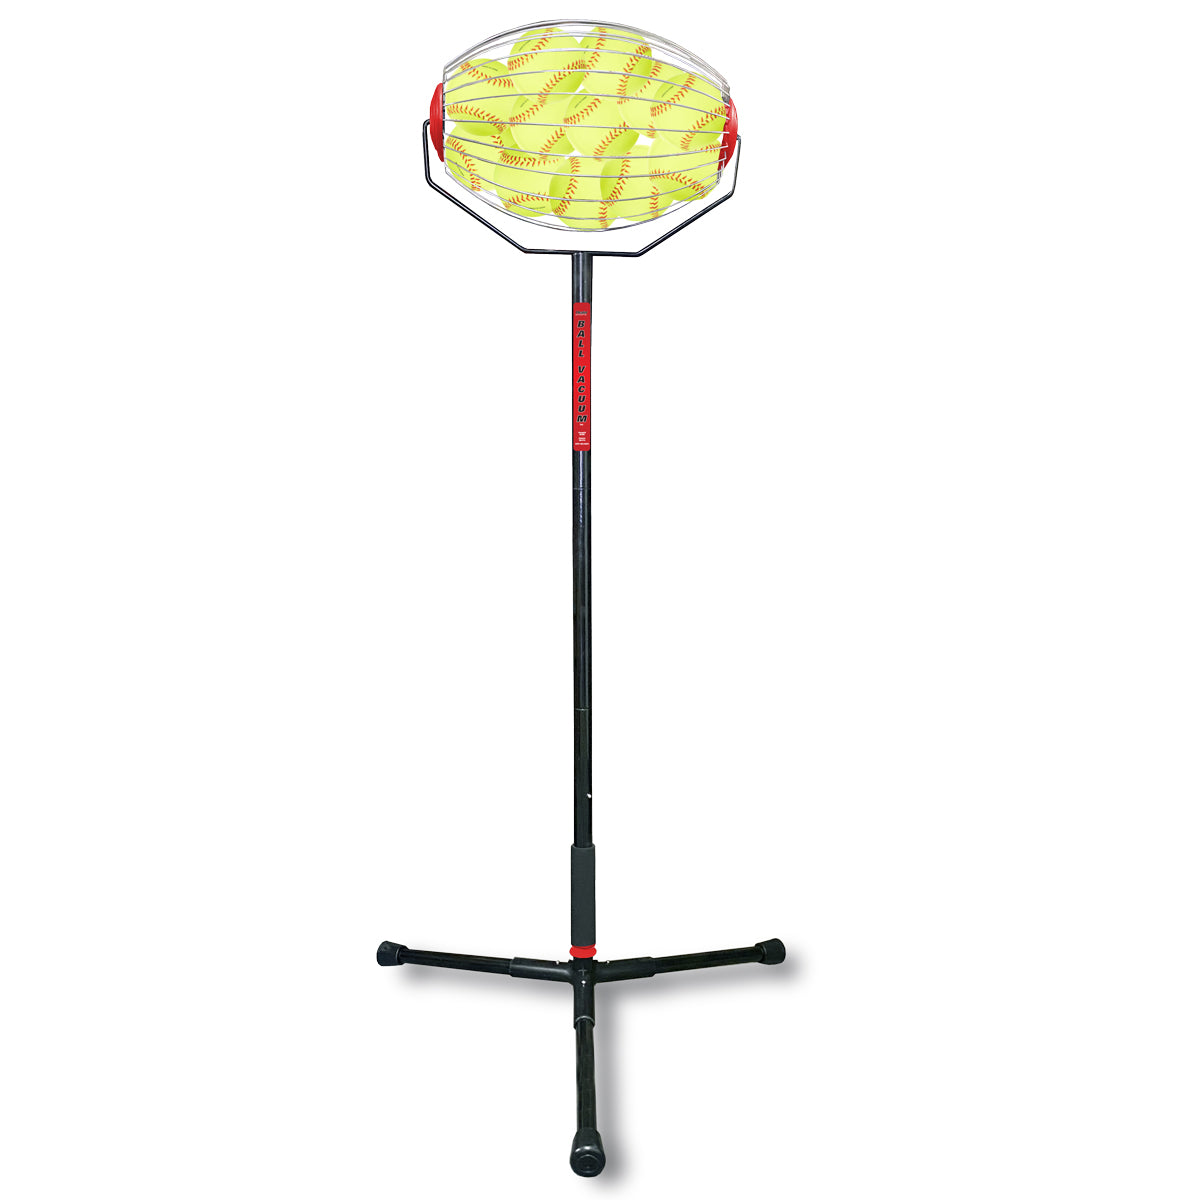 Ball Vacuum & Holder - High-Strength Stainless Steel Wires - Easy Ball Retrieval - Tripod Stand - Baseballs & Softballs - Heater Sports - Pitch Machine Pros